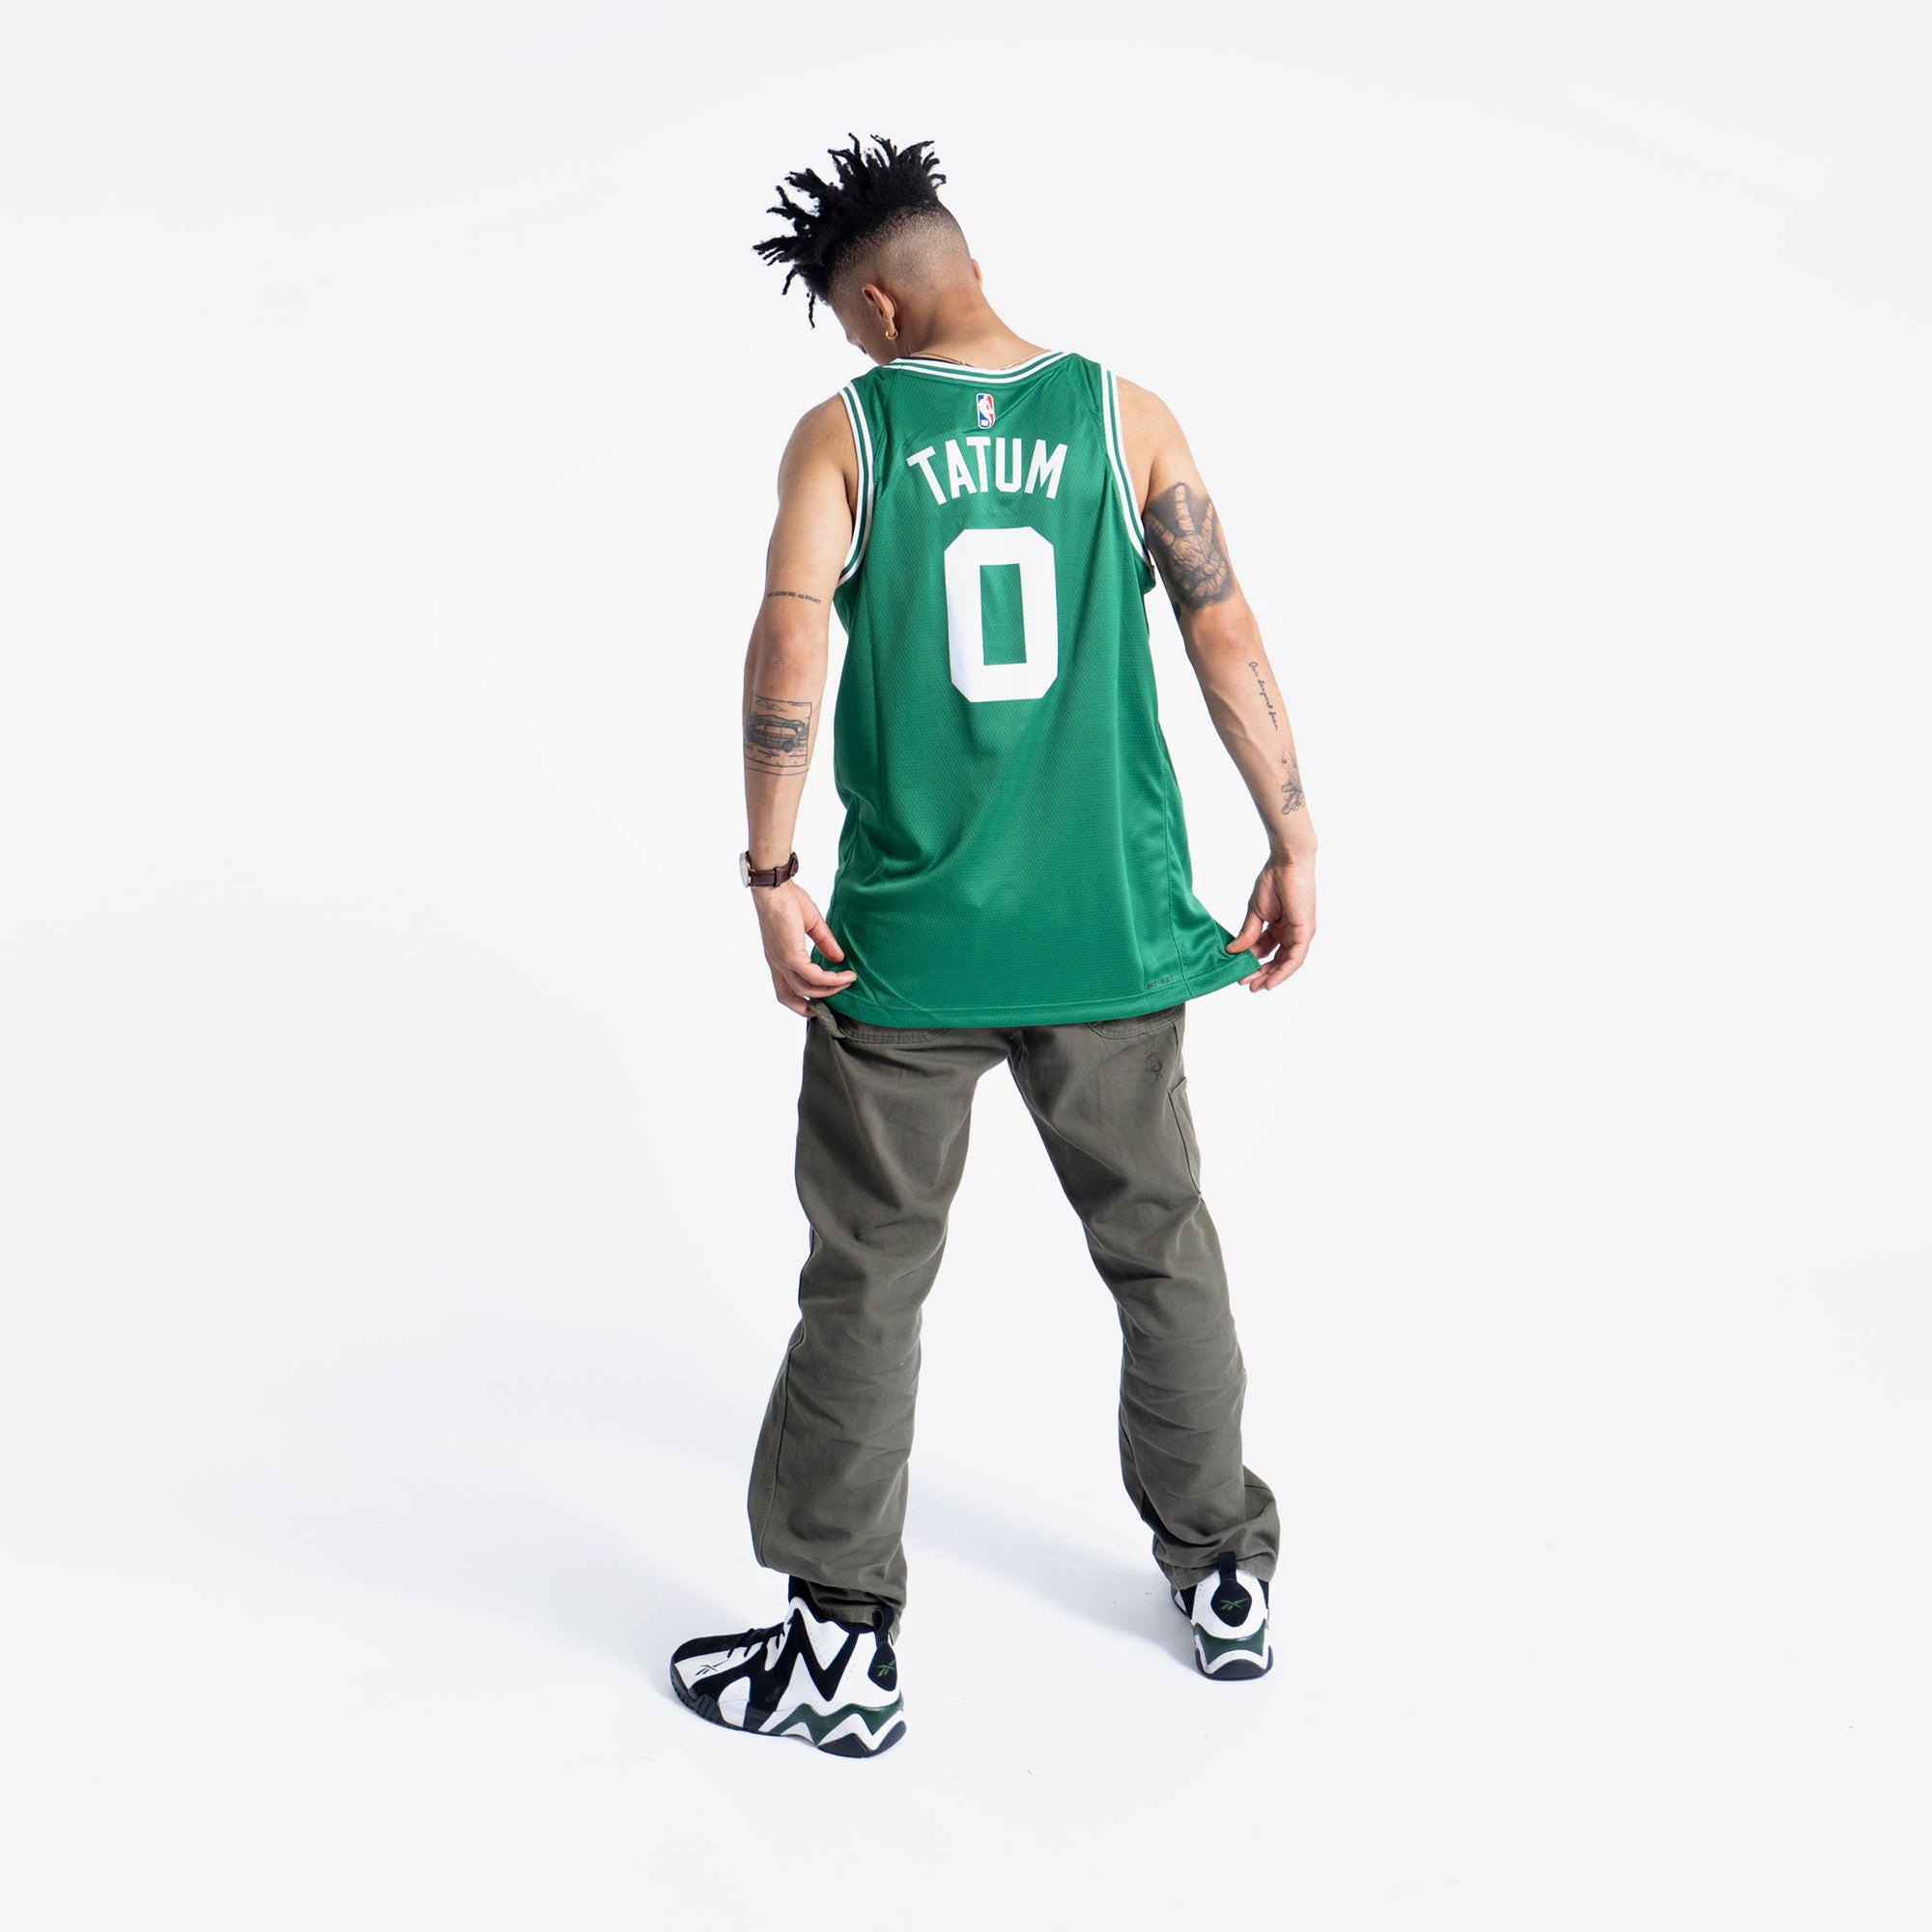 Nike Basketball NBA Boston Celtics Jayson Tatum unisex jersey vest in white